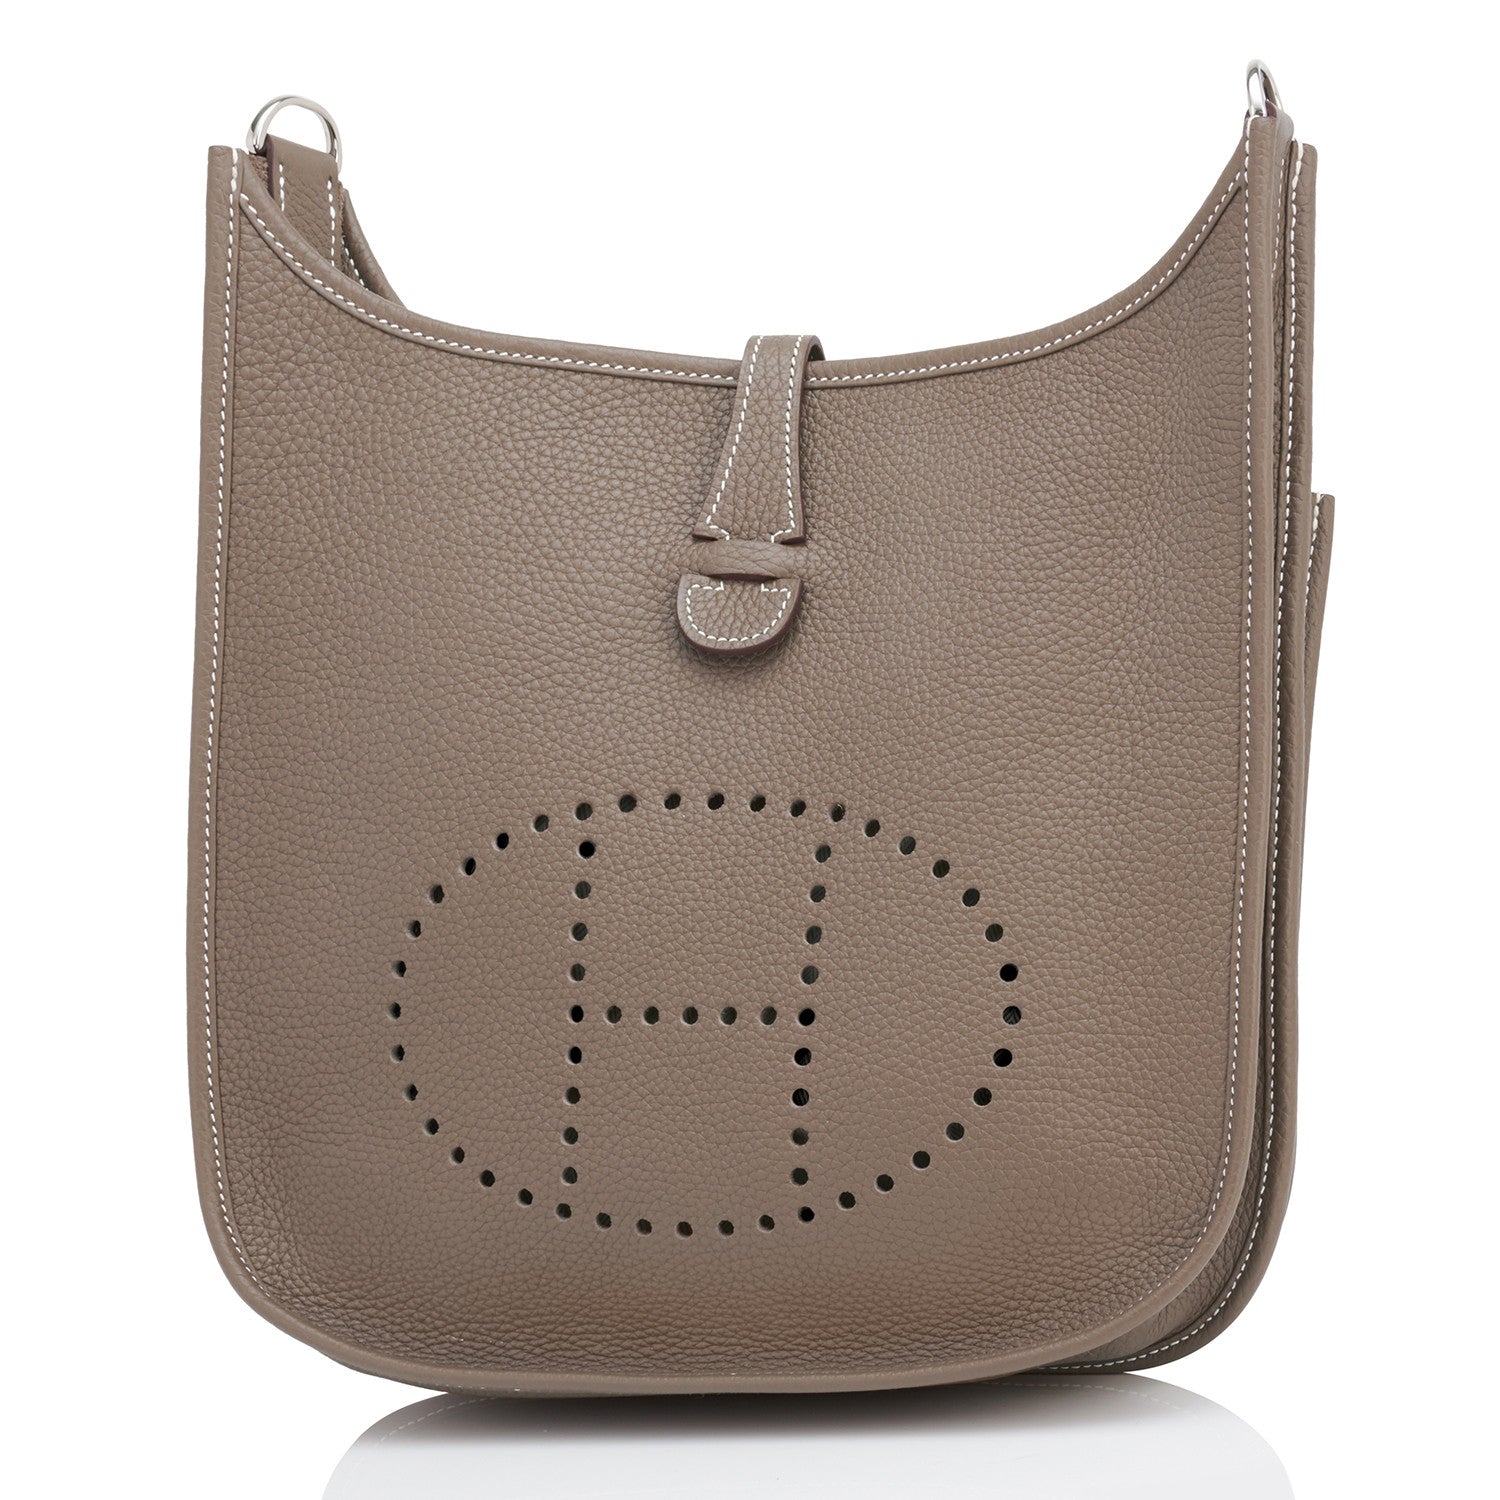 Hermes Bag Garden Party 36 Bag Etoupe / Clemence Leather Palladium